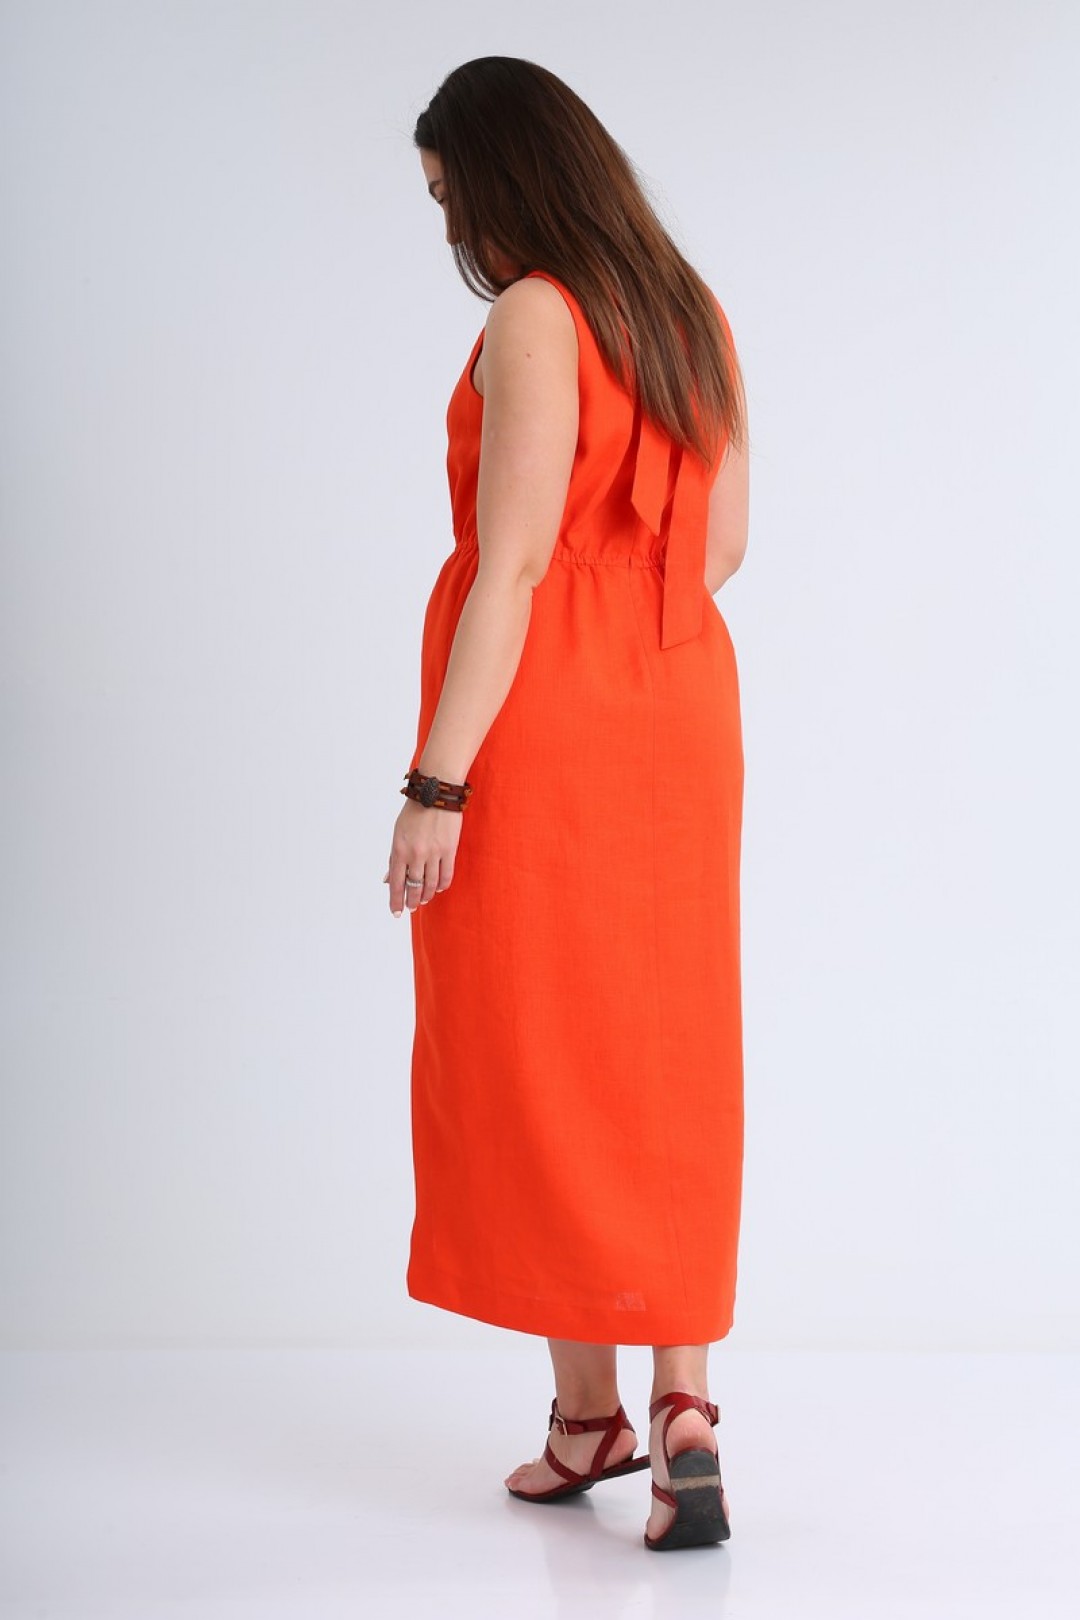 Платье MALI 421-054 оранжевый